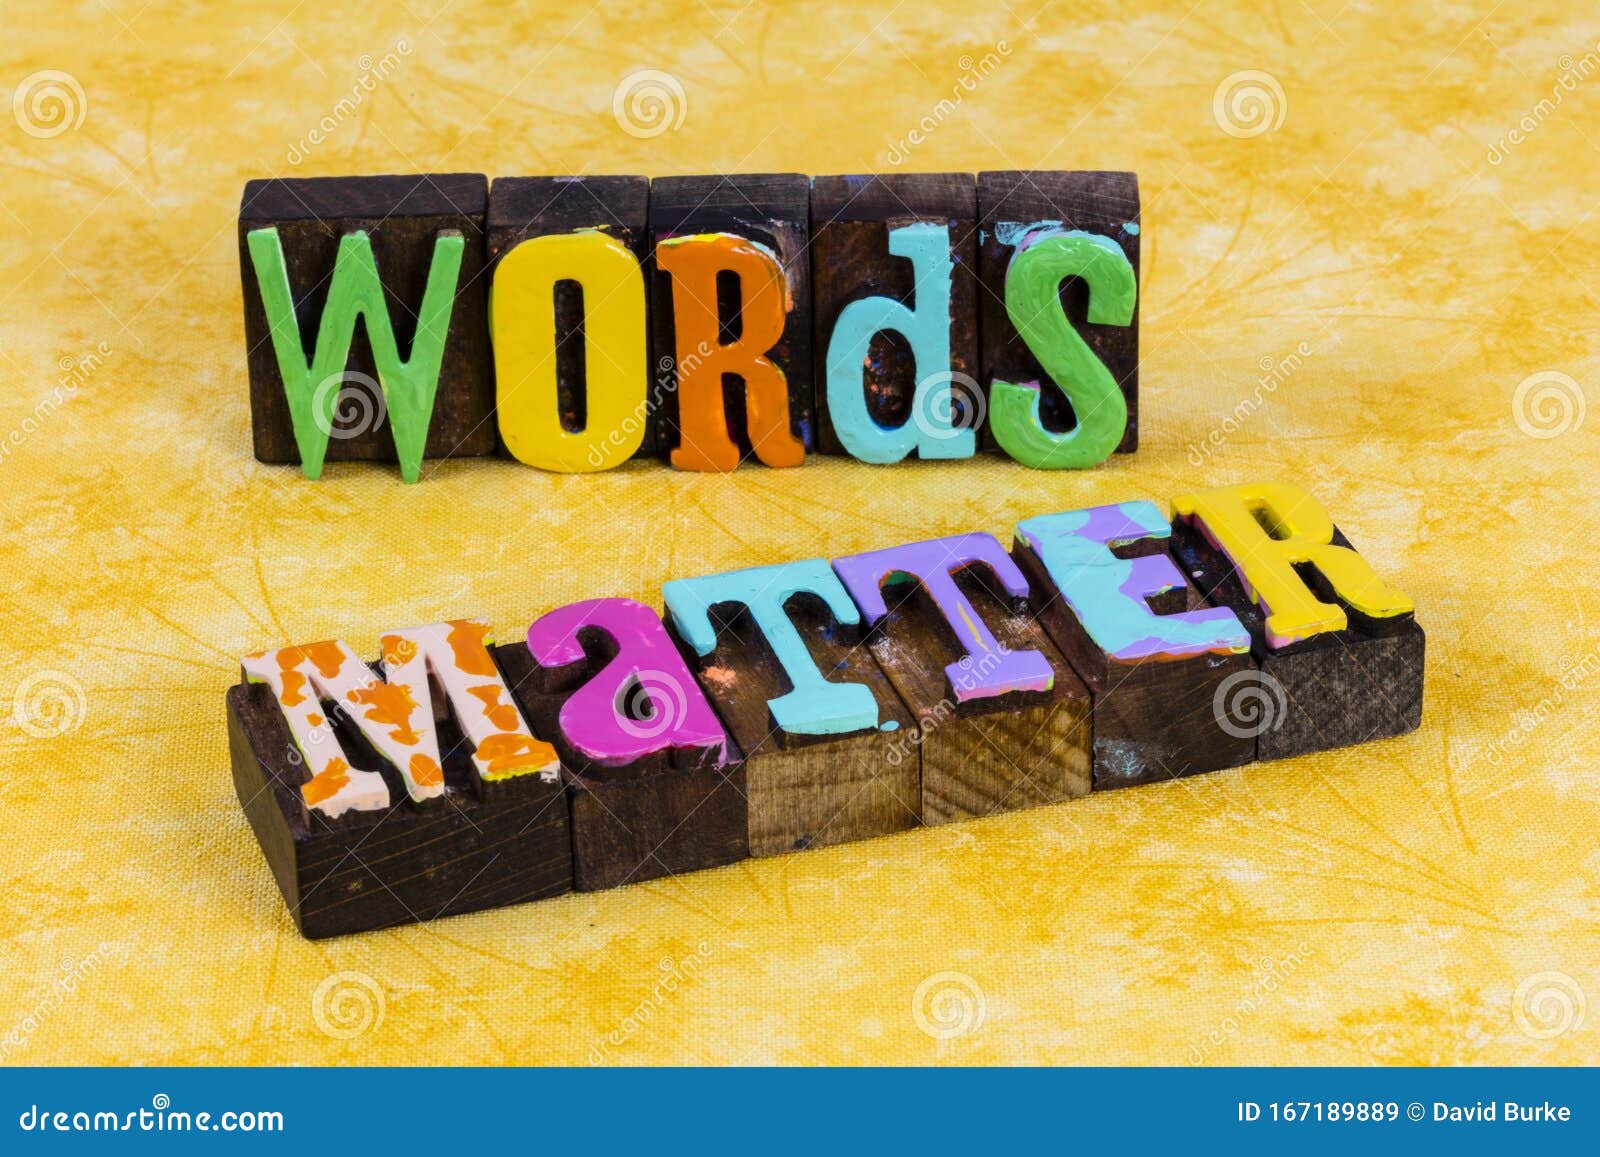 words matter instruction explanation positive attitude inspiration success encouragement